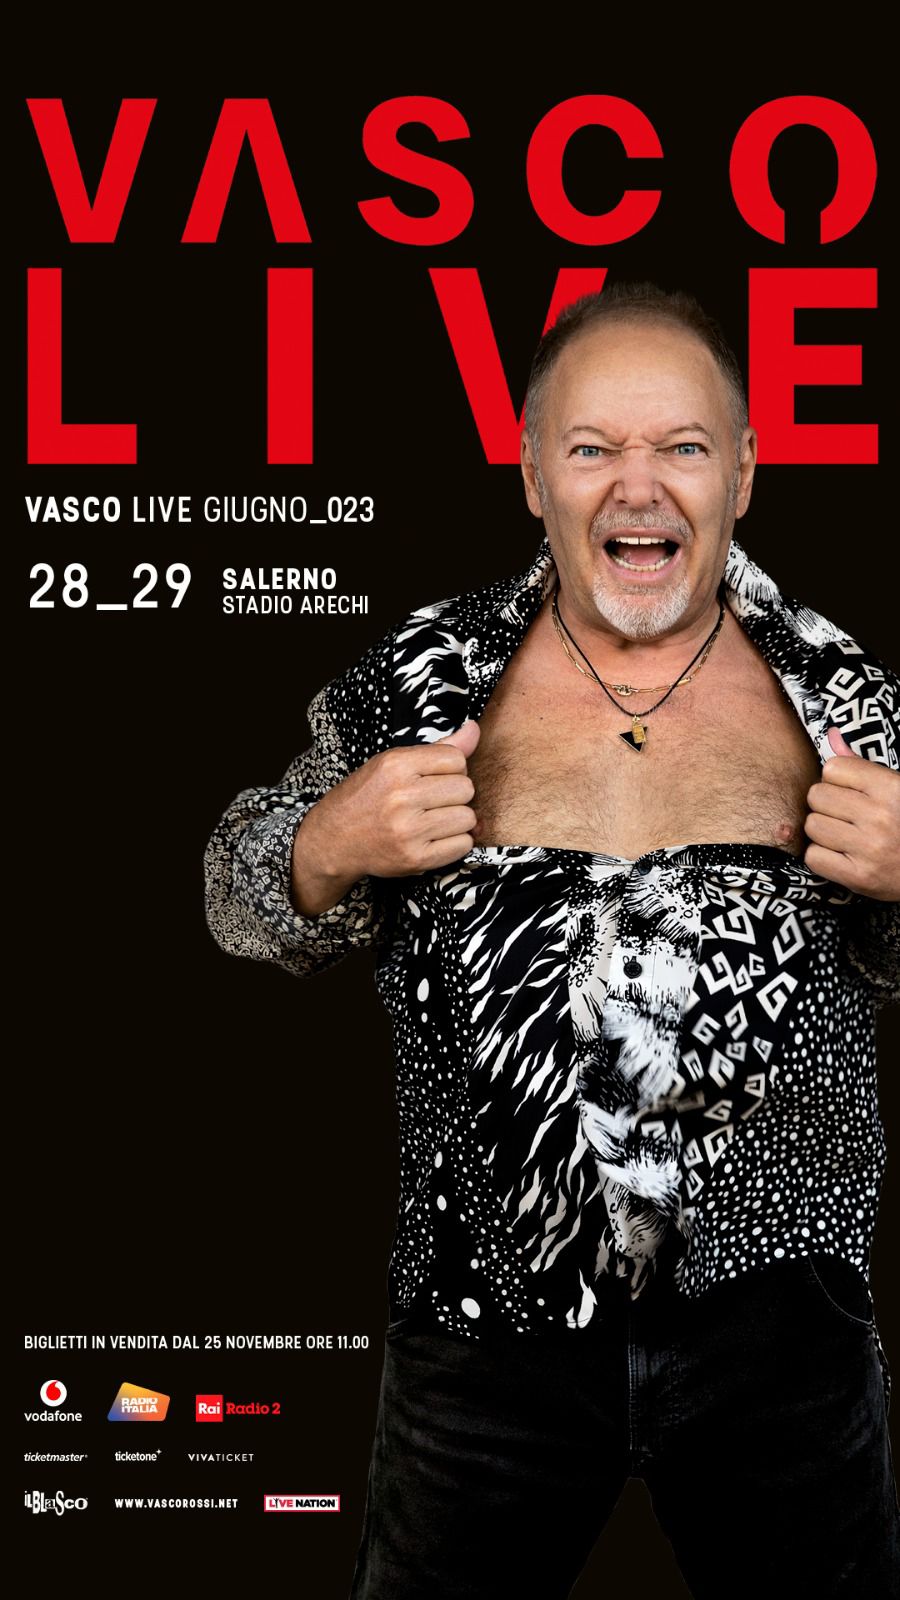 
  
    
      
      
          
Locandina Vasco Live

    
  
          
